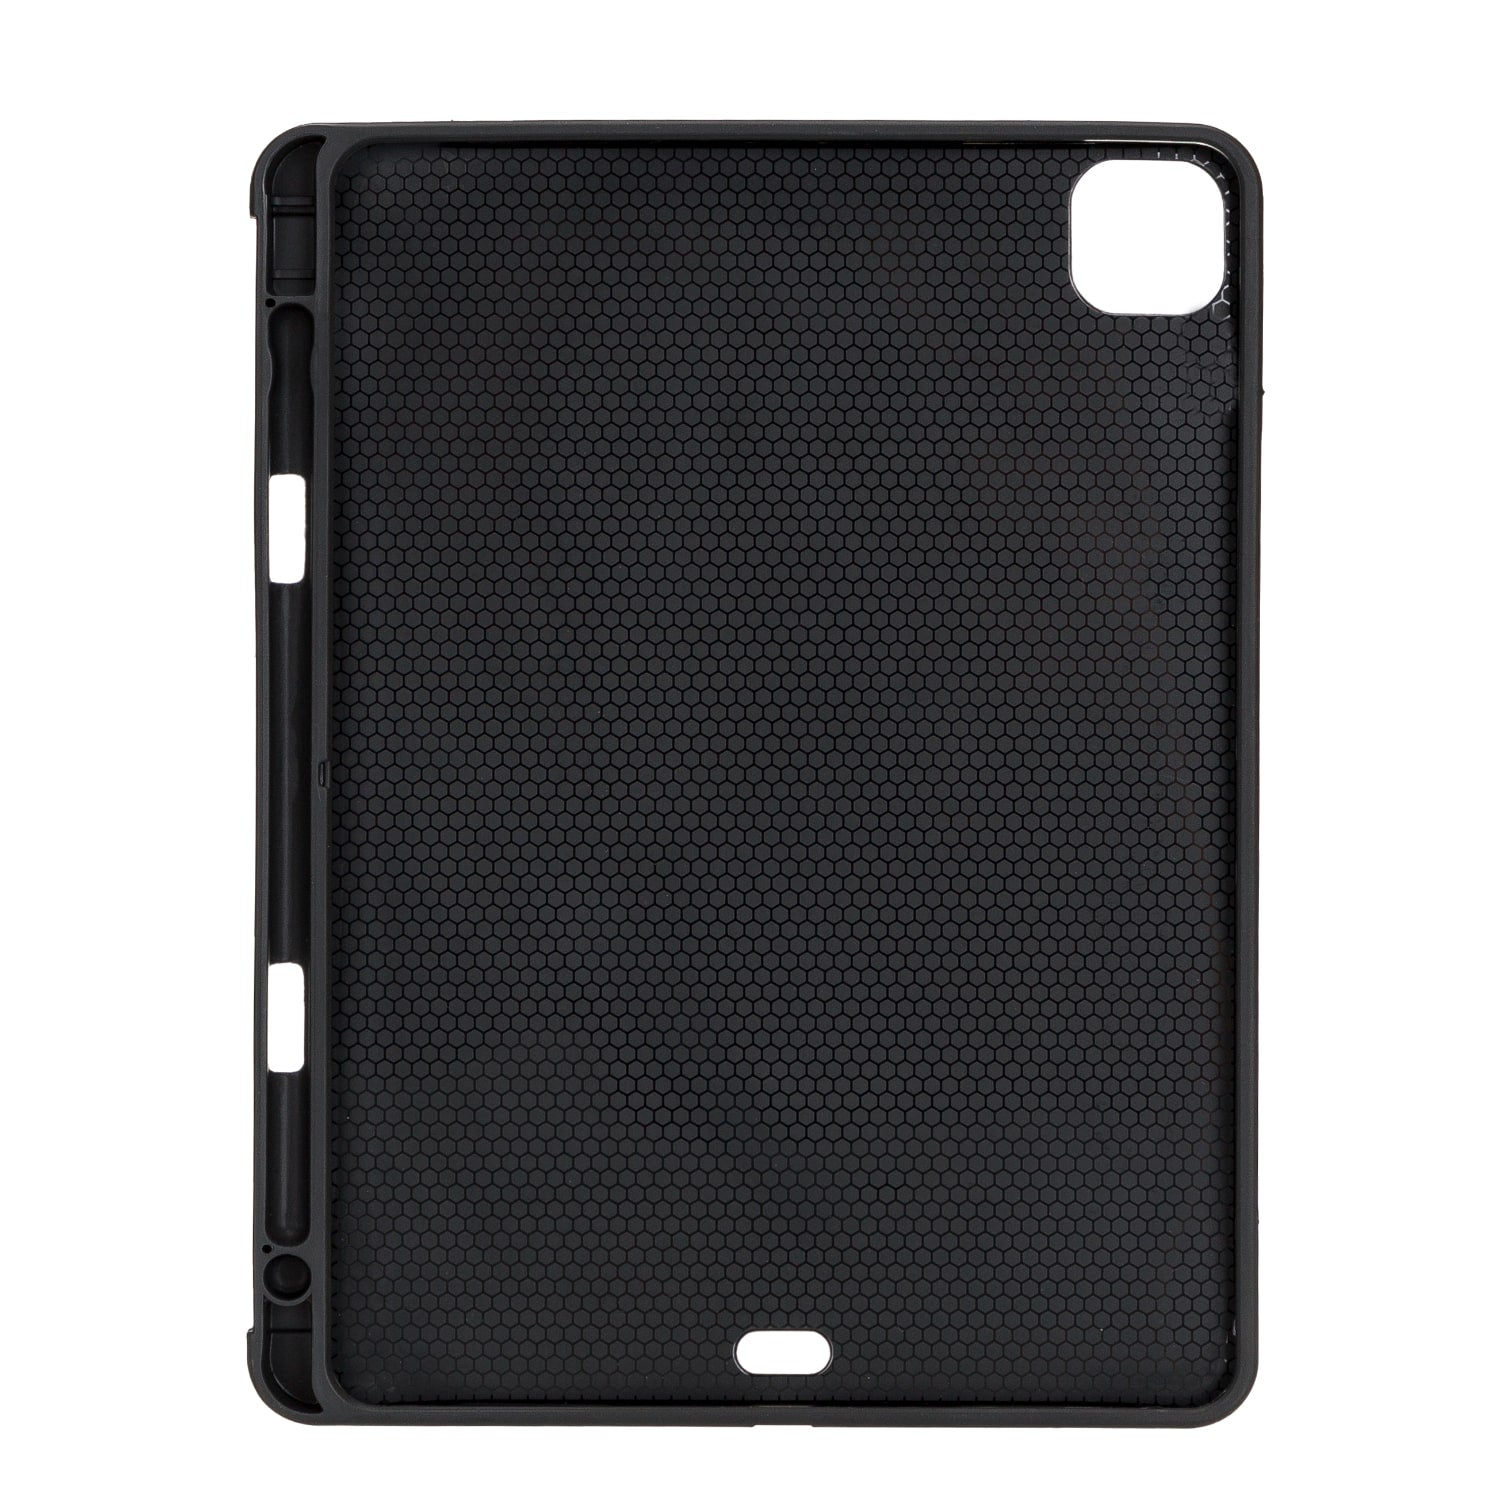 Tan Brown Leather iPad Air 10.9 Inc Smart Folio Case with Apple Pen Holder - Bomonti - 6